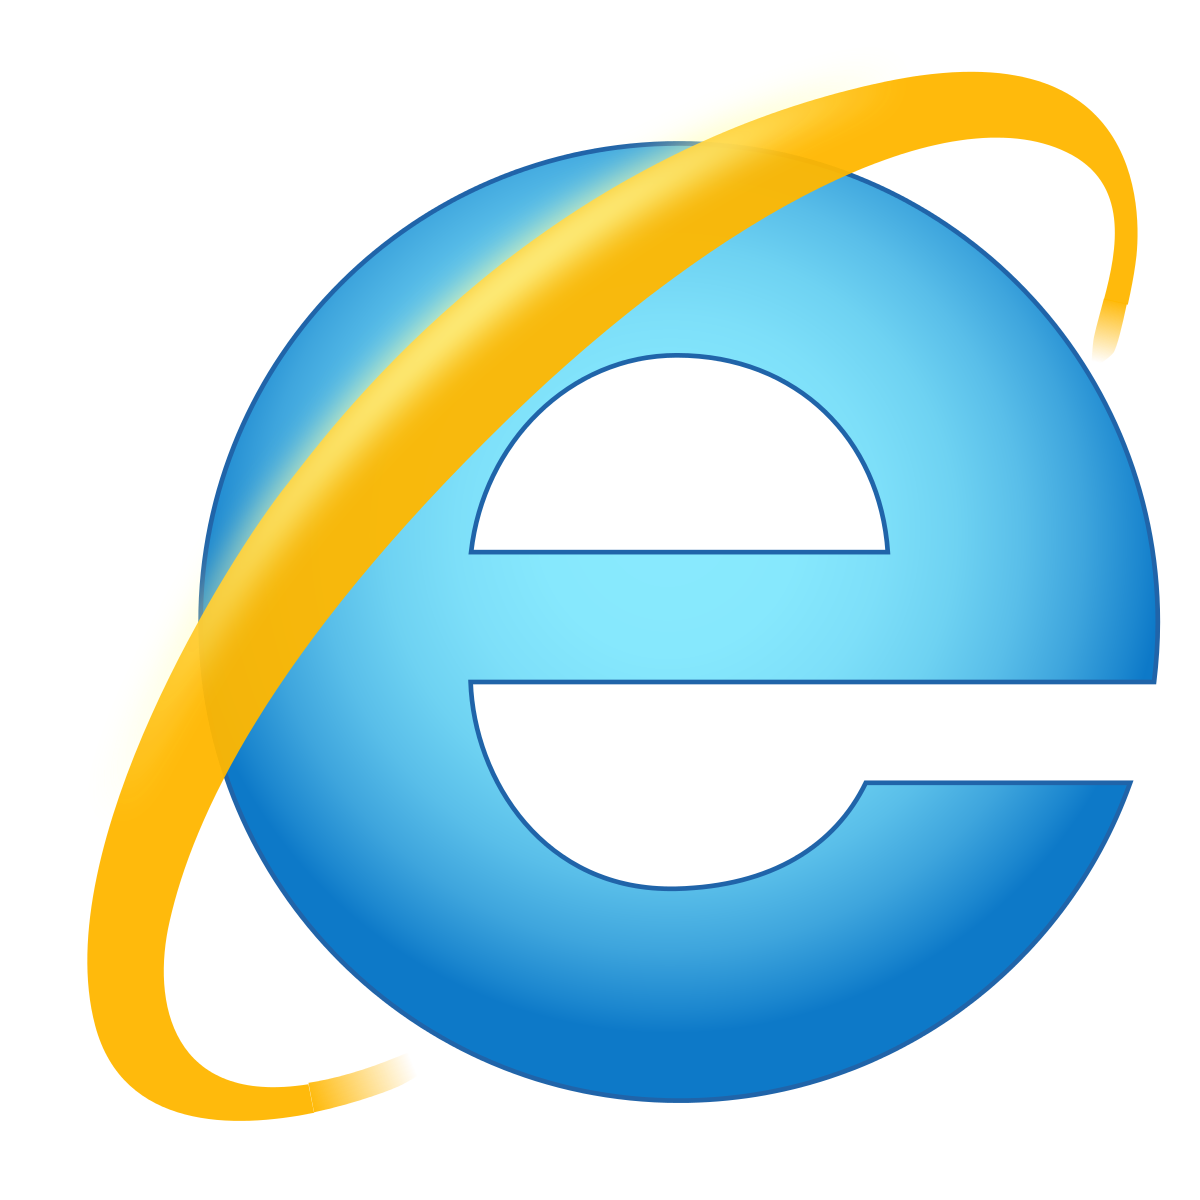 Браузер Интернет Эксплорер / Internet Explorer 11 для Windows ПК